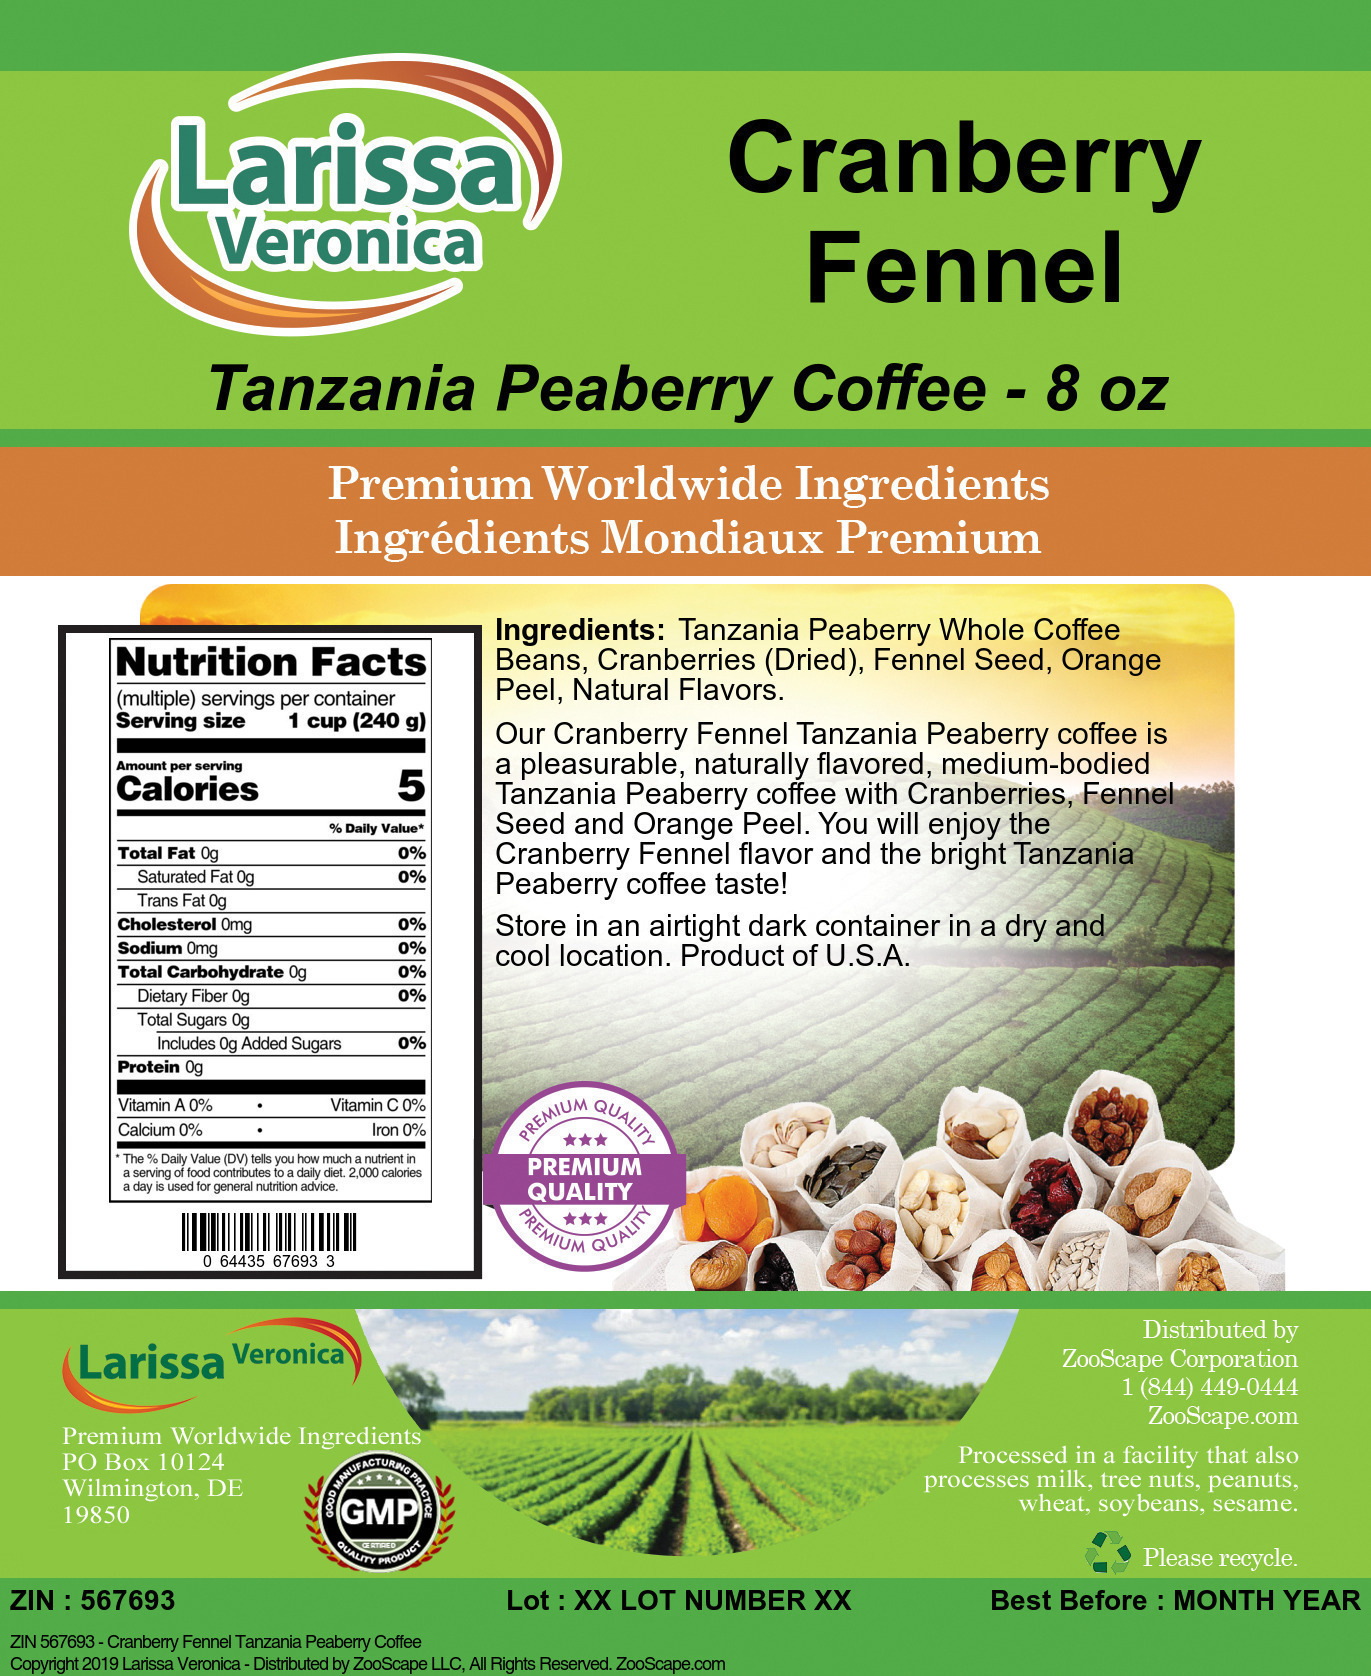 Cranberry Fennel Tanzania Peaberry Coffee - Label